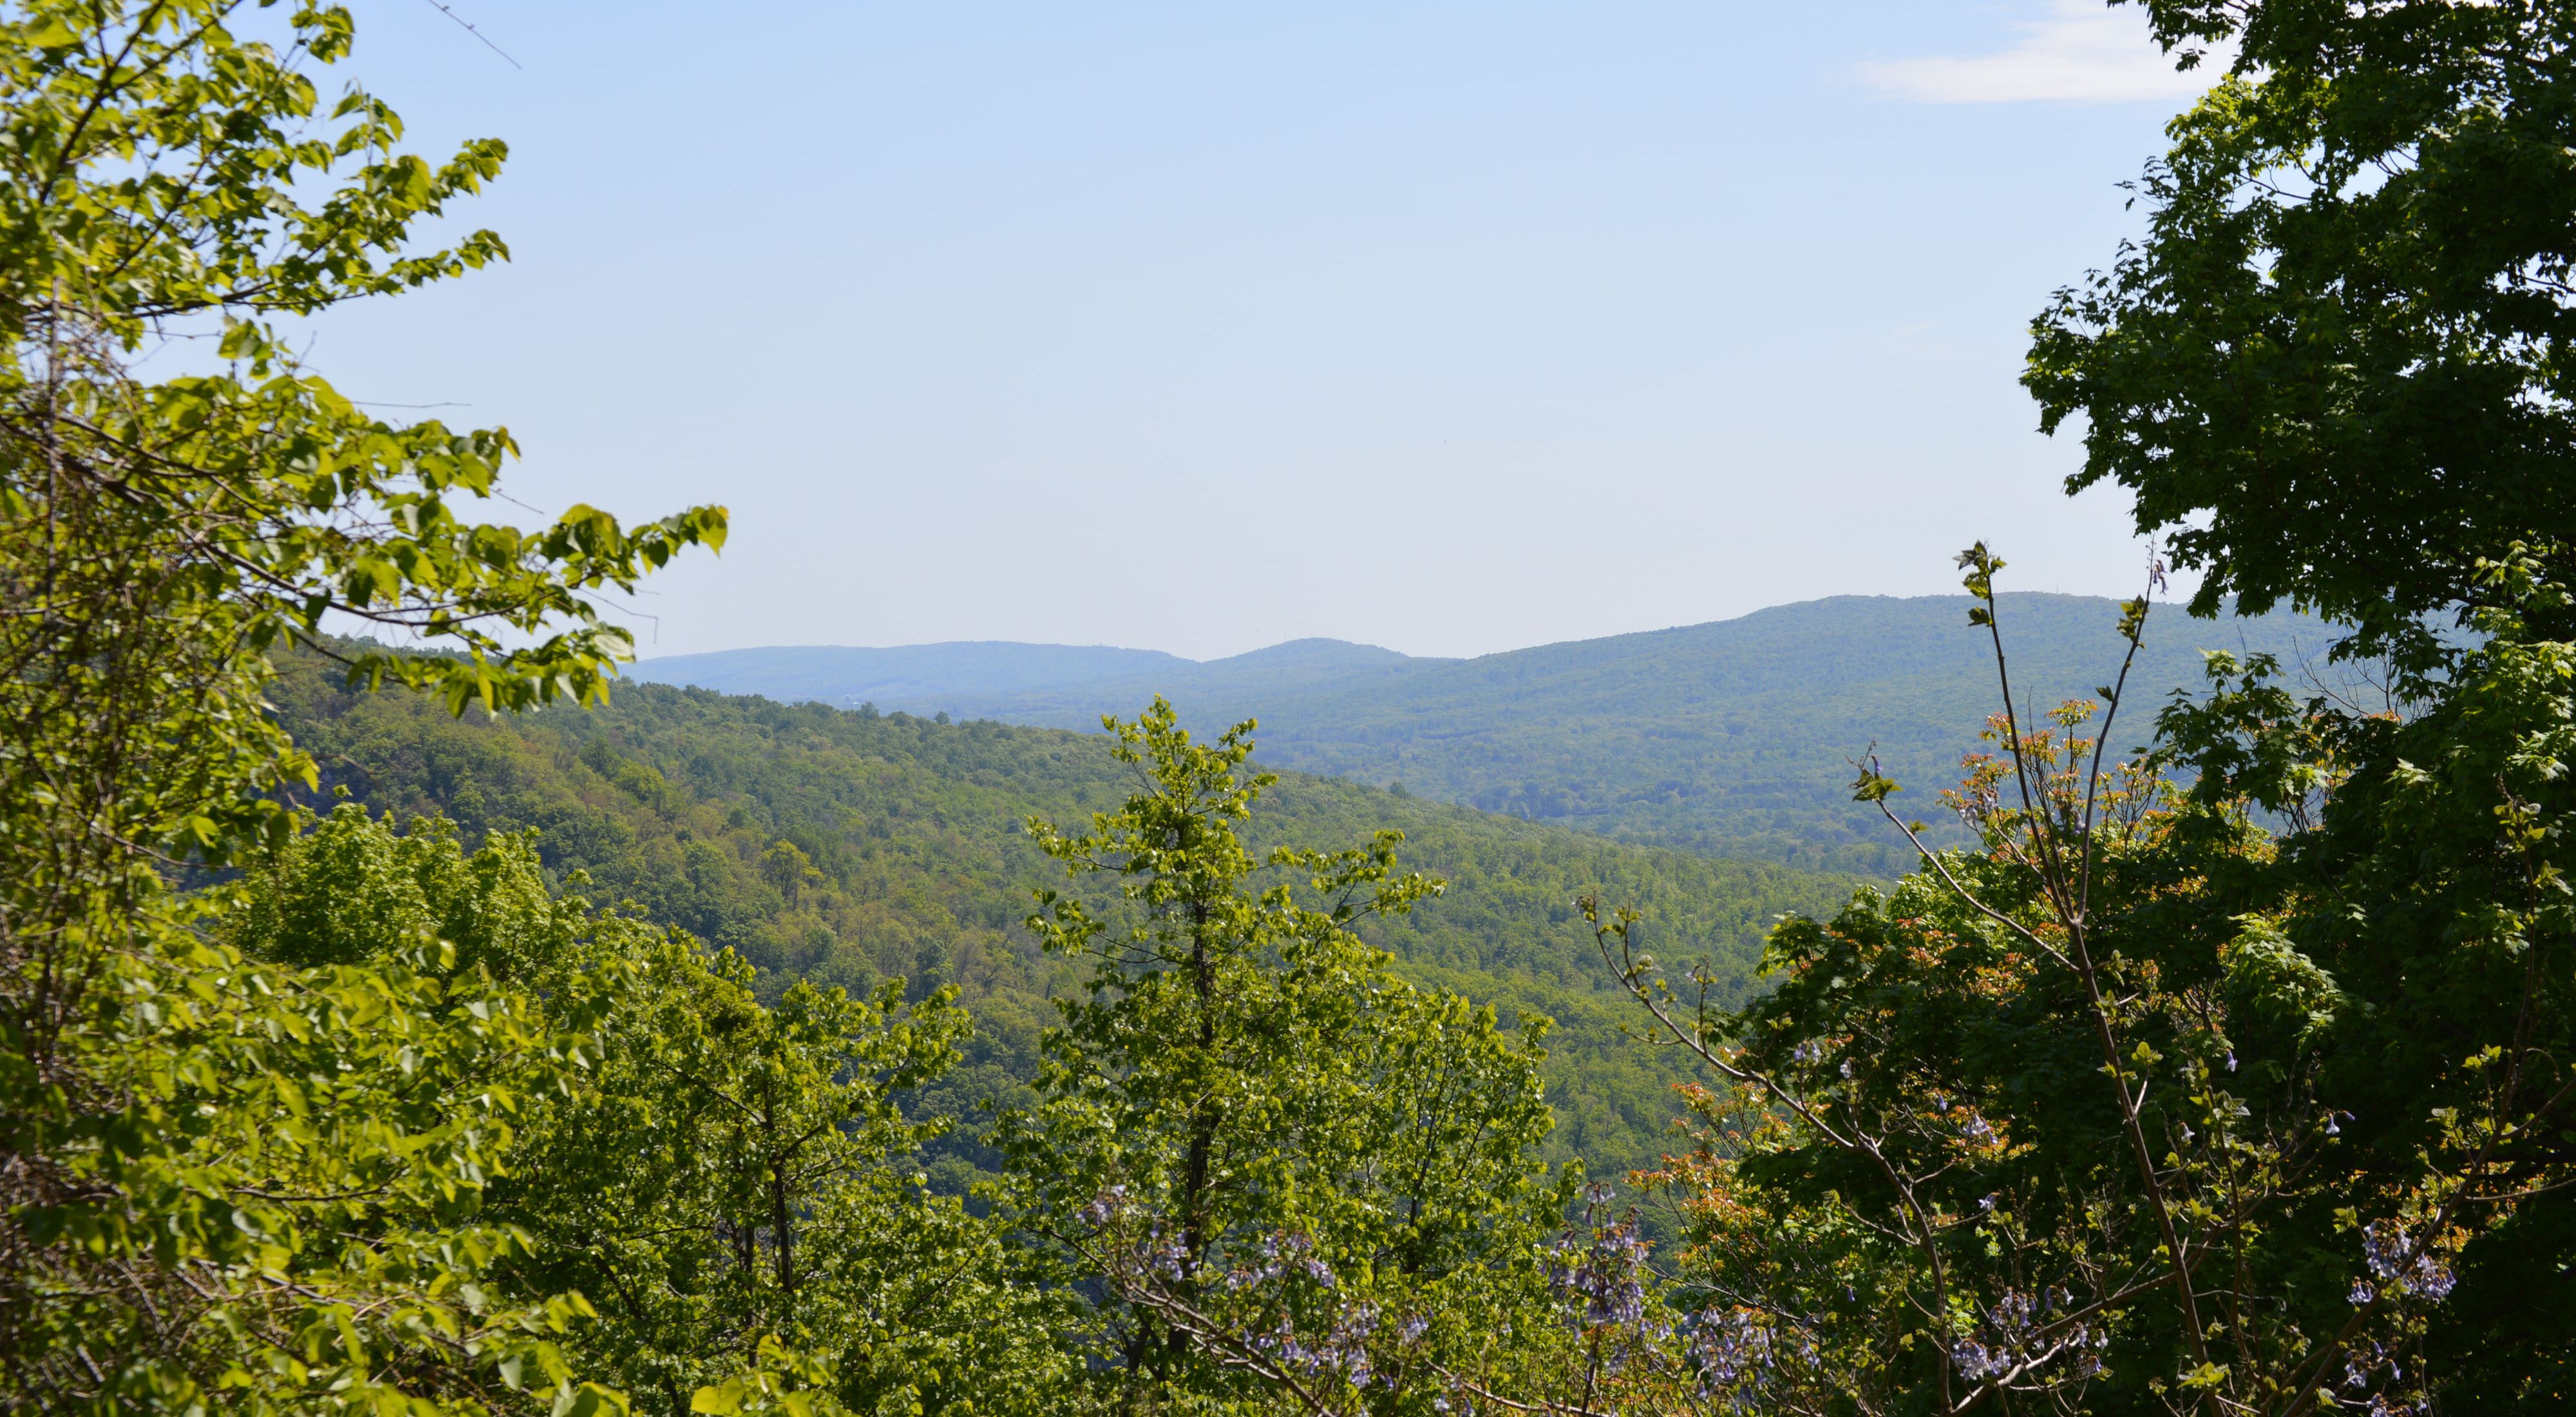 View of the Kittatinny Ridge from the Cove Mountain, Pennsylvania.